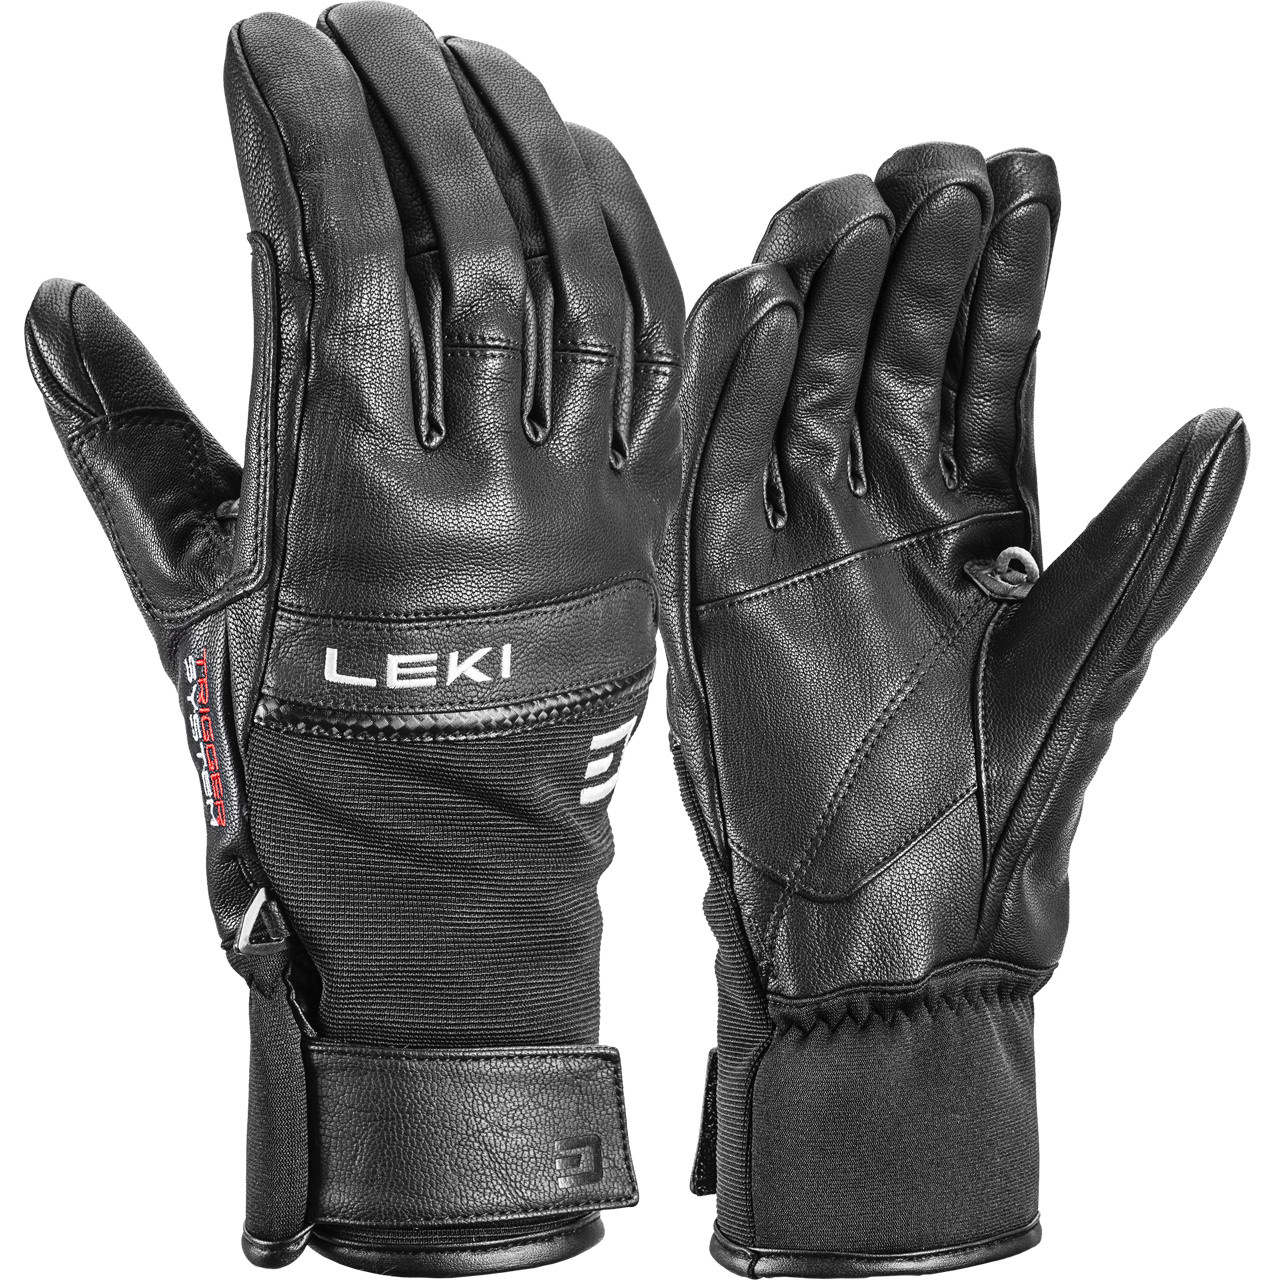 Leki Herren Handschuh LIGHTNING black/white von Leki